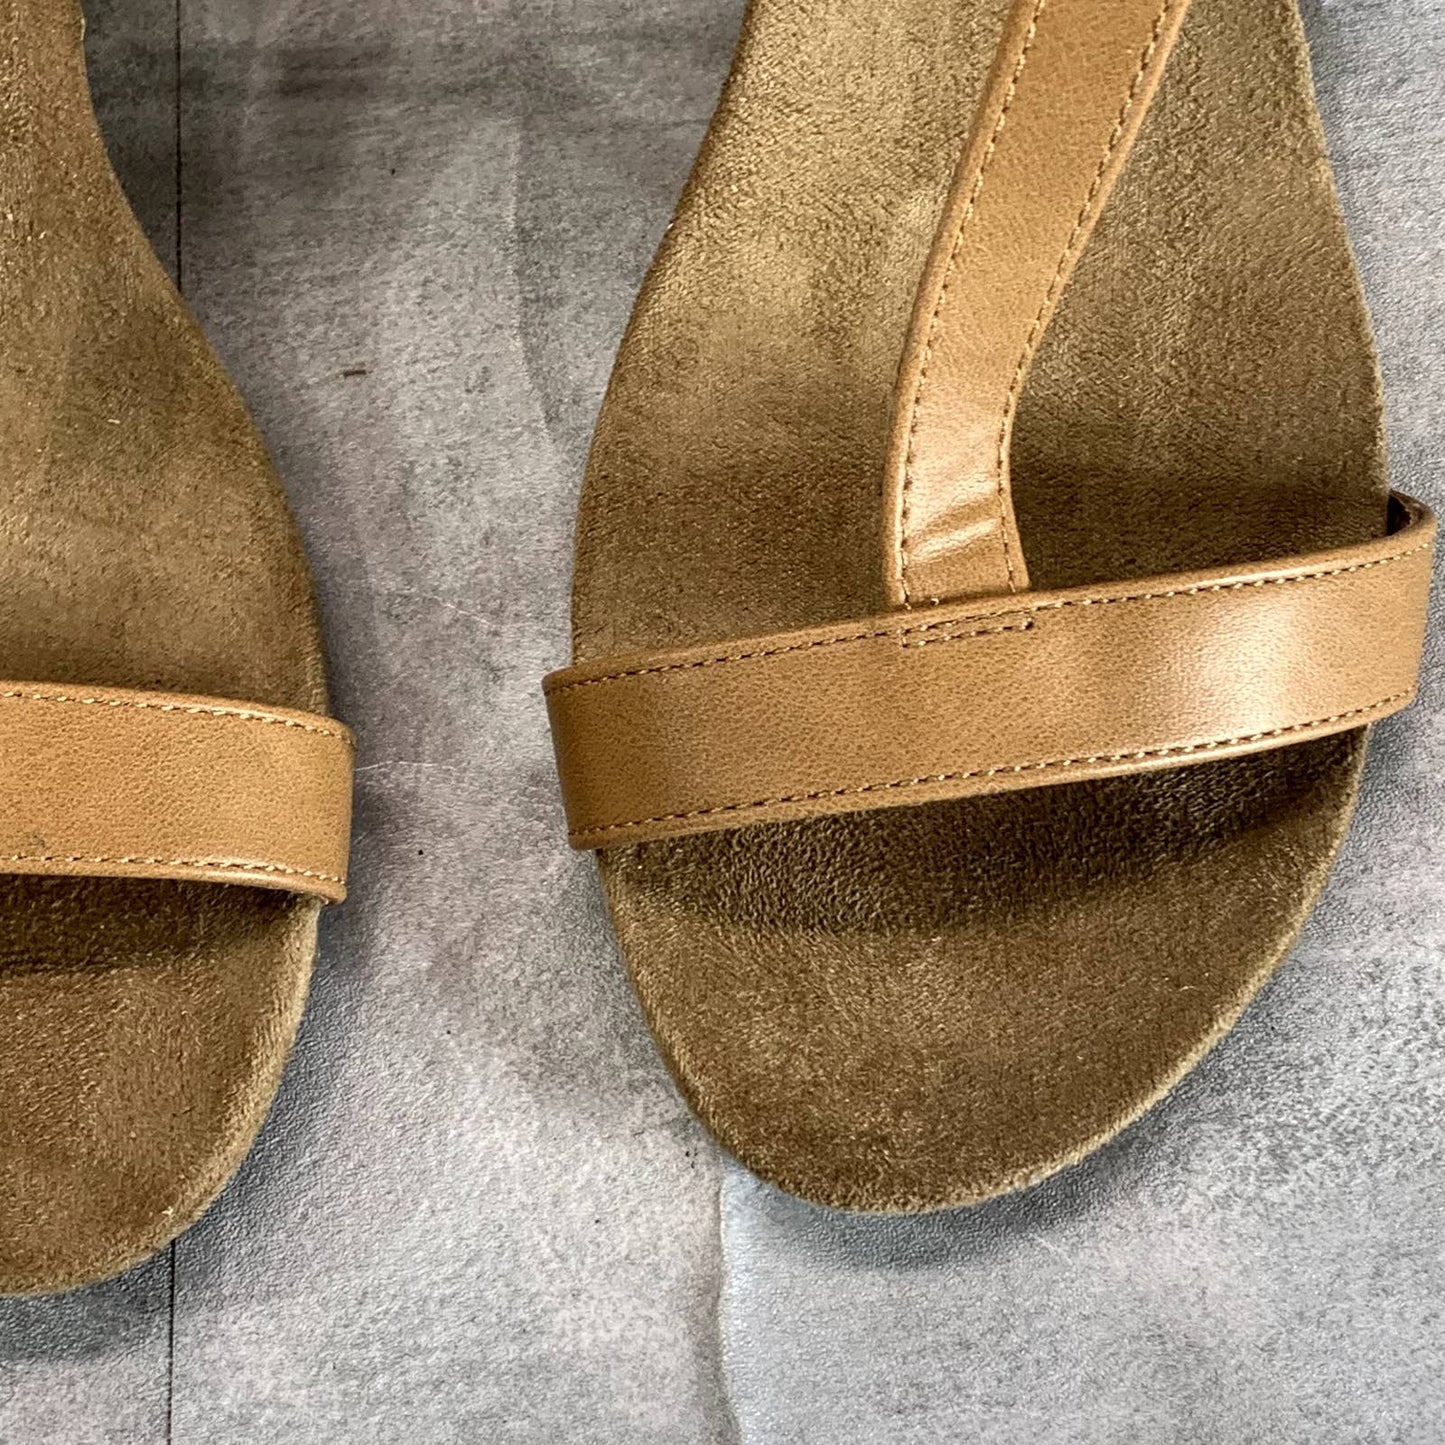 STYLE & Co Women’s Medium Tan Mulan Round-Toe T-Strap Slingback Wedge Sandals